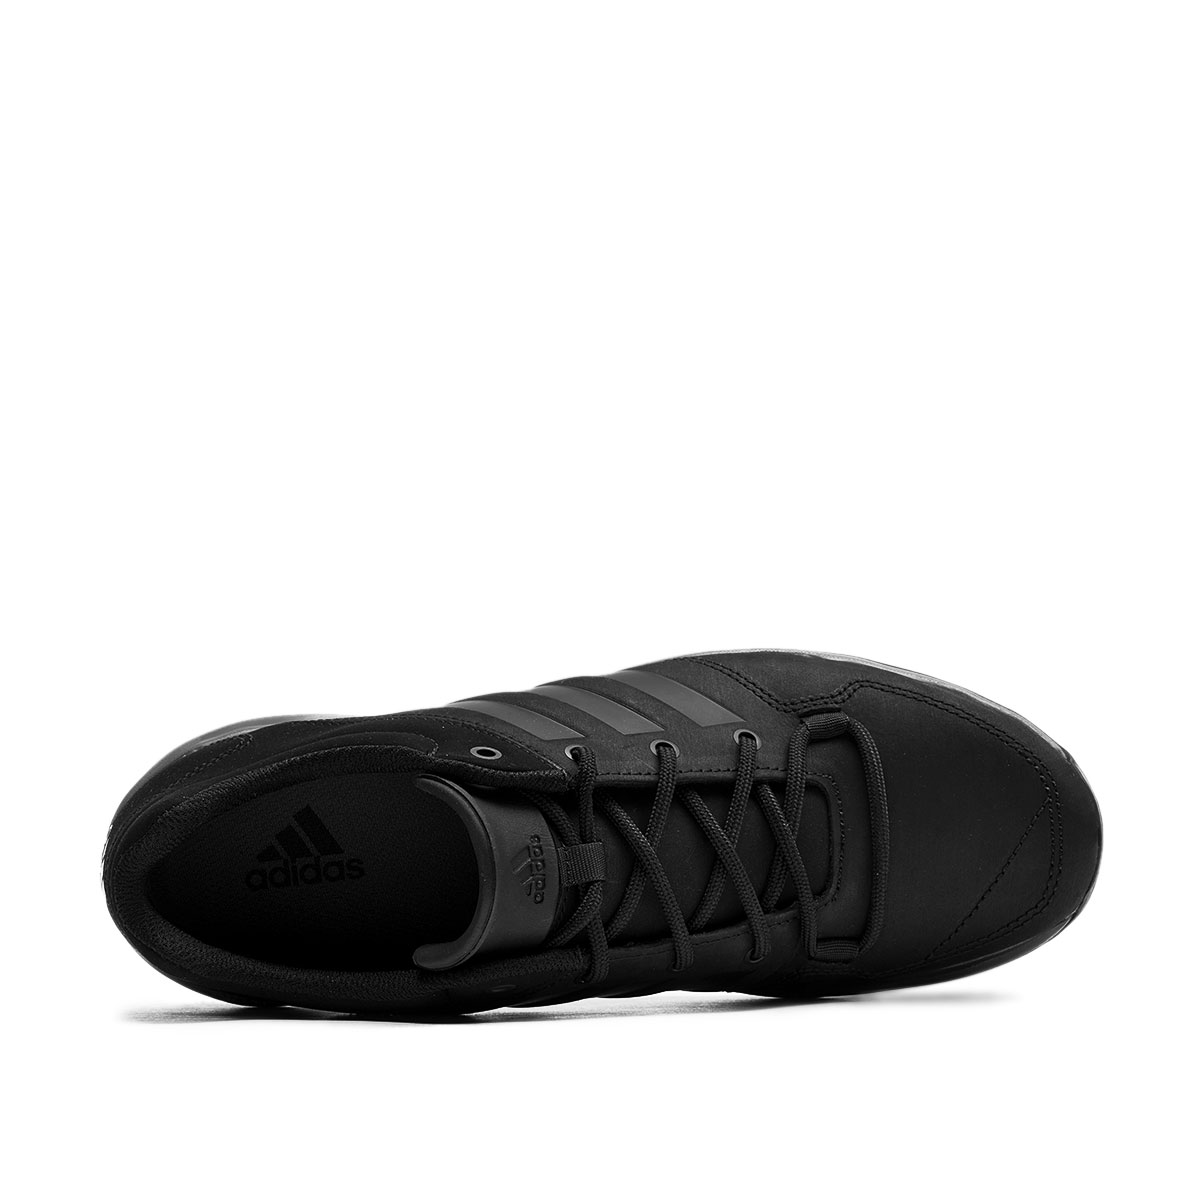 adidas Daroga Plus Leather  B27271